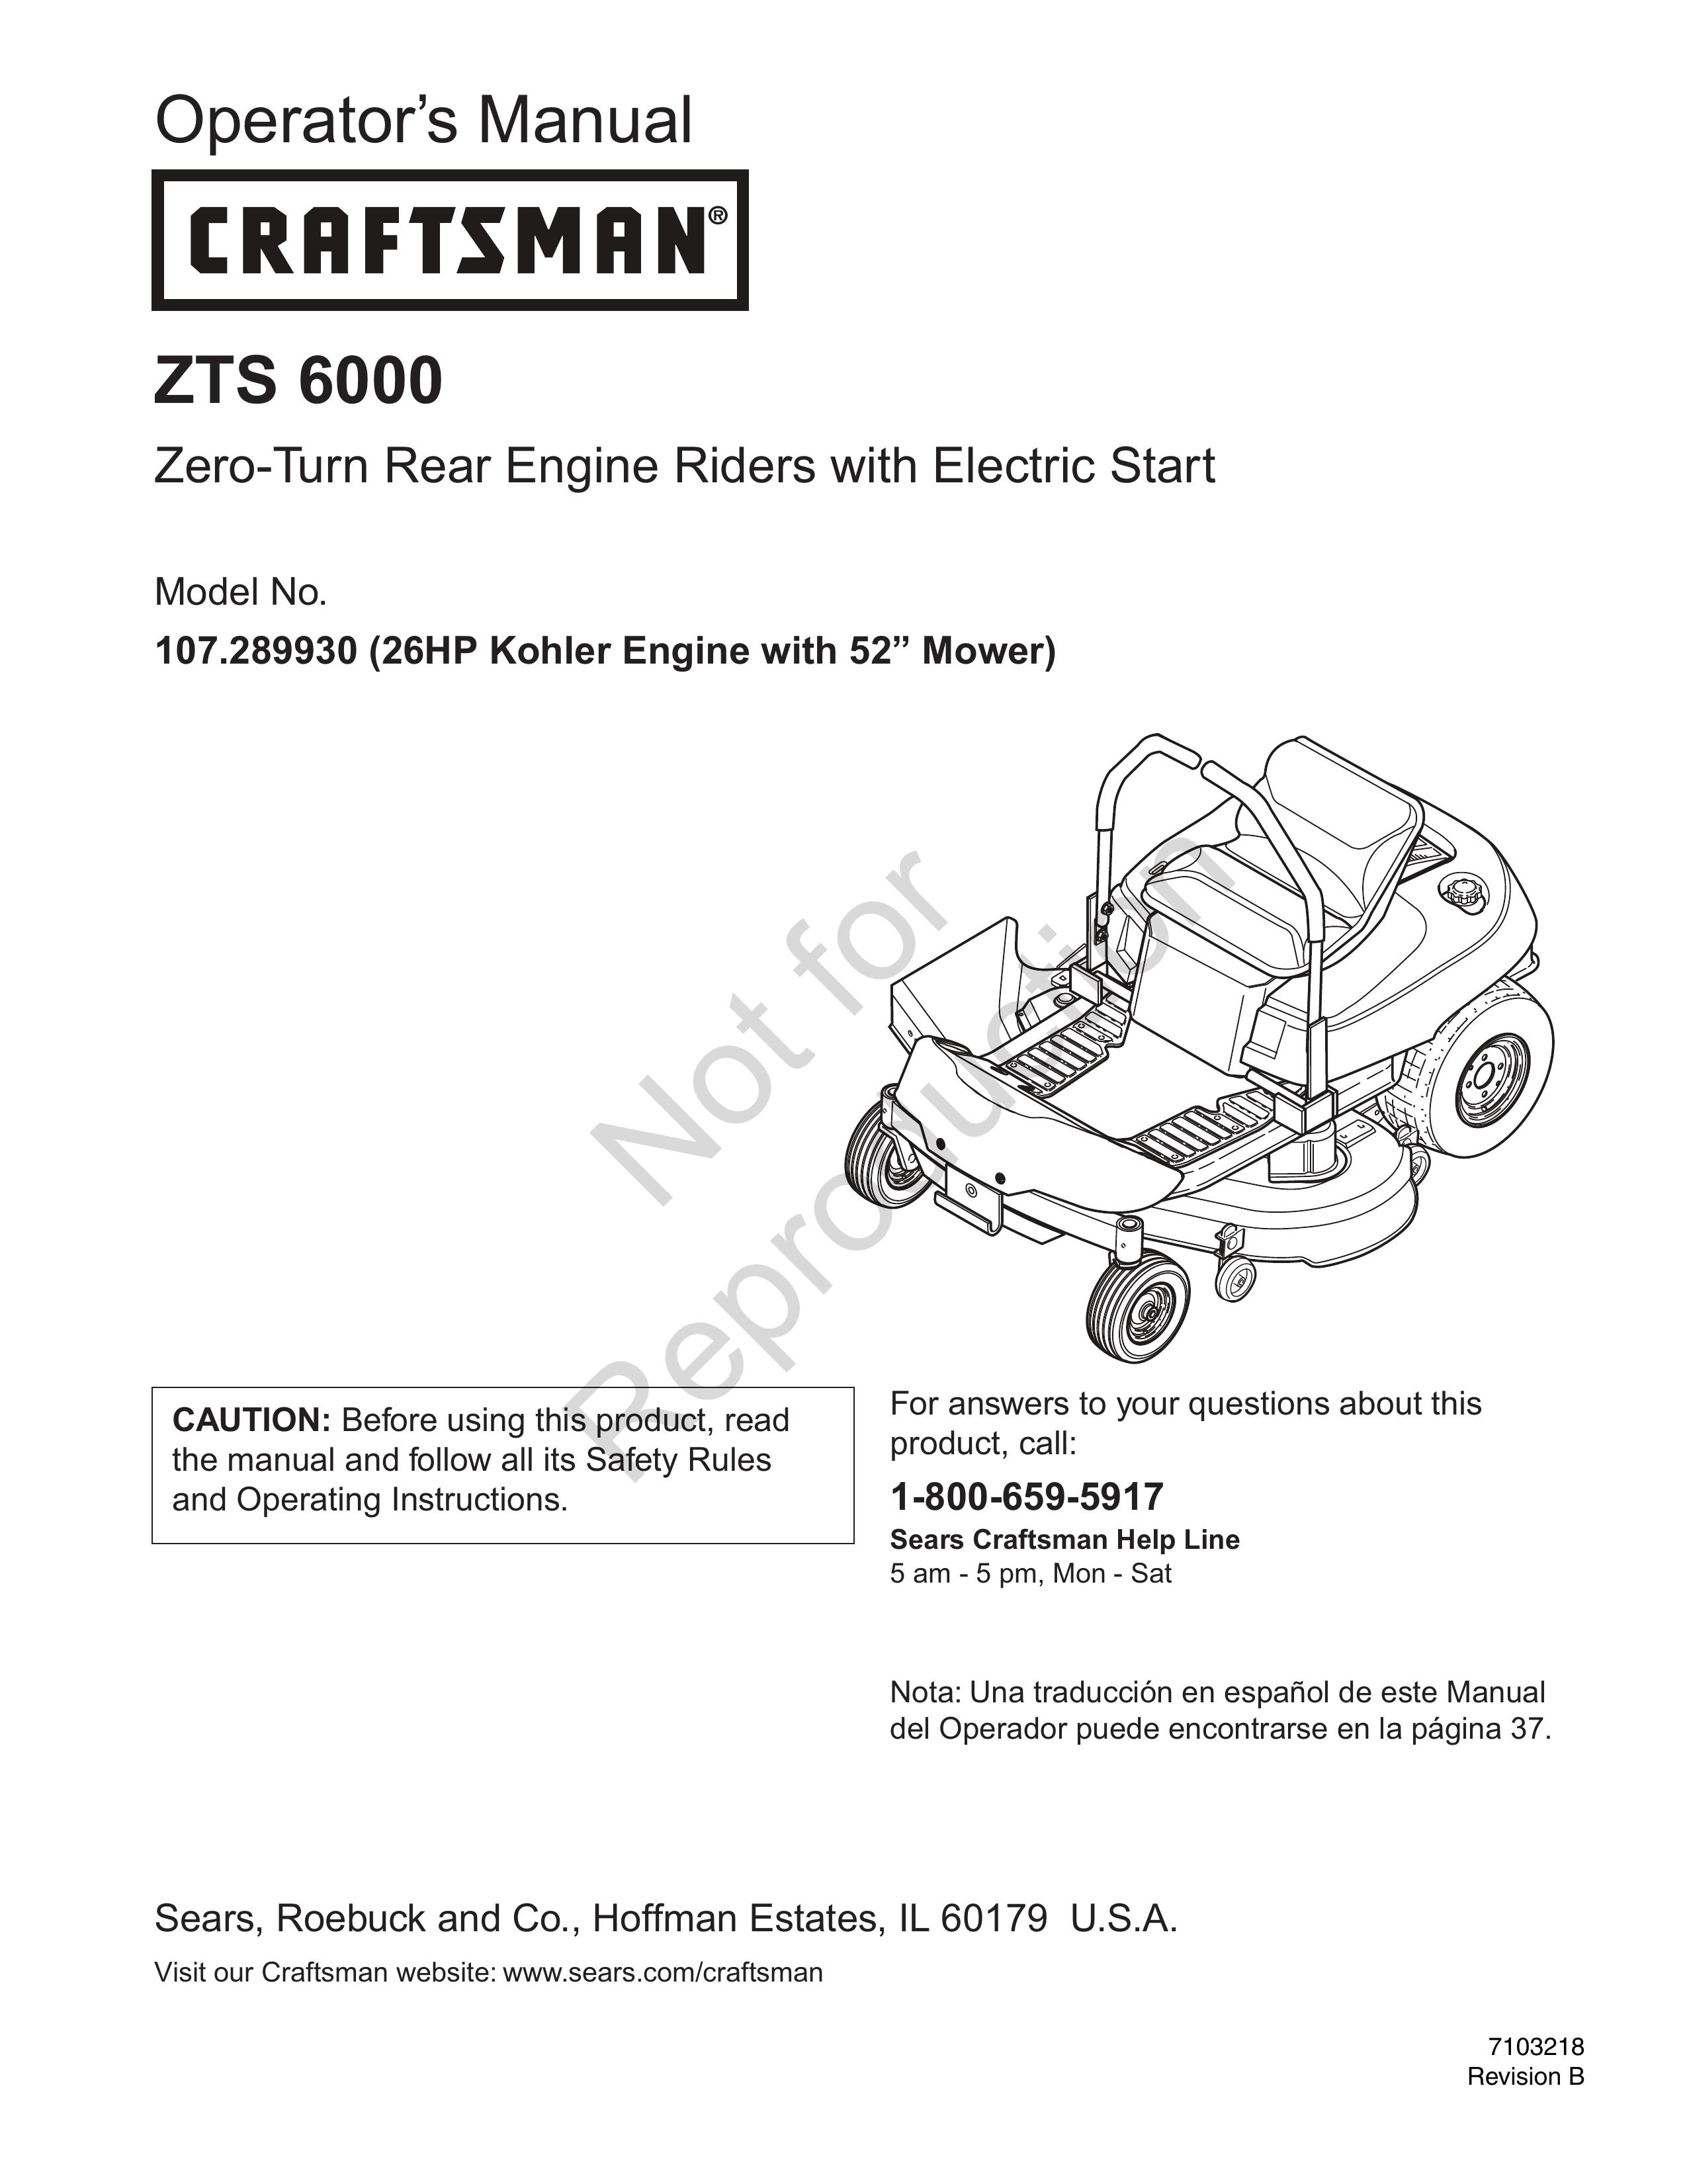 Craftsman 107.28993 Lawn Mower User Manual